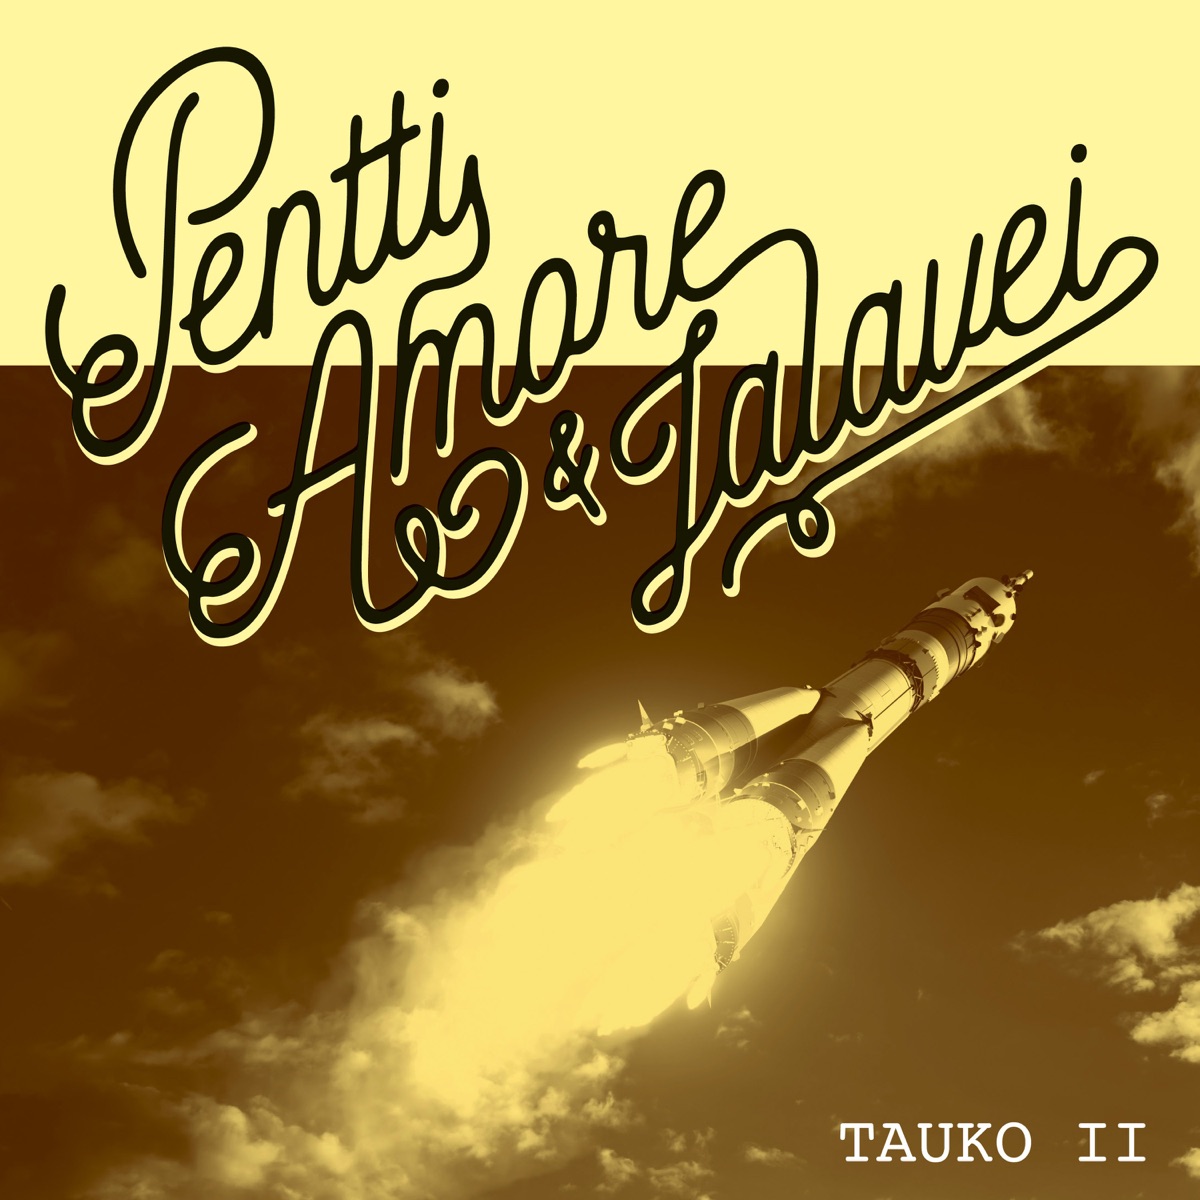 Tauko II (Juice Leskinen) - Album by Pentti Amore & Jalavei - Apple Music